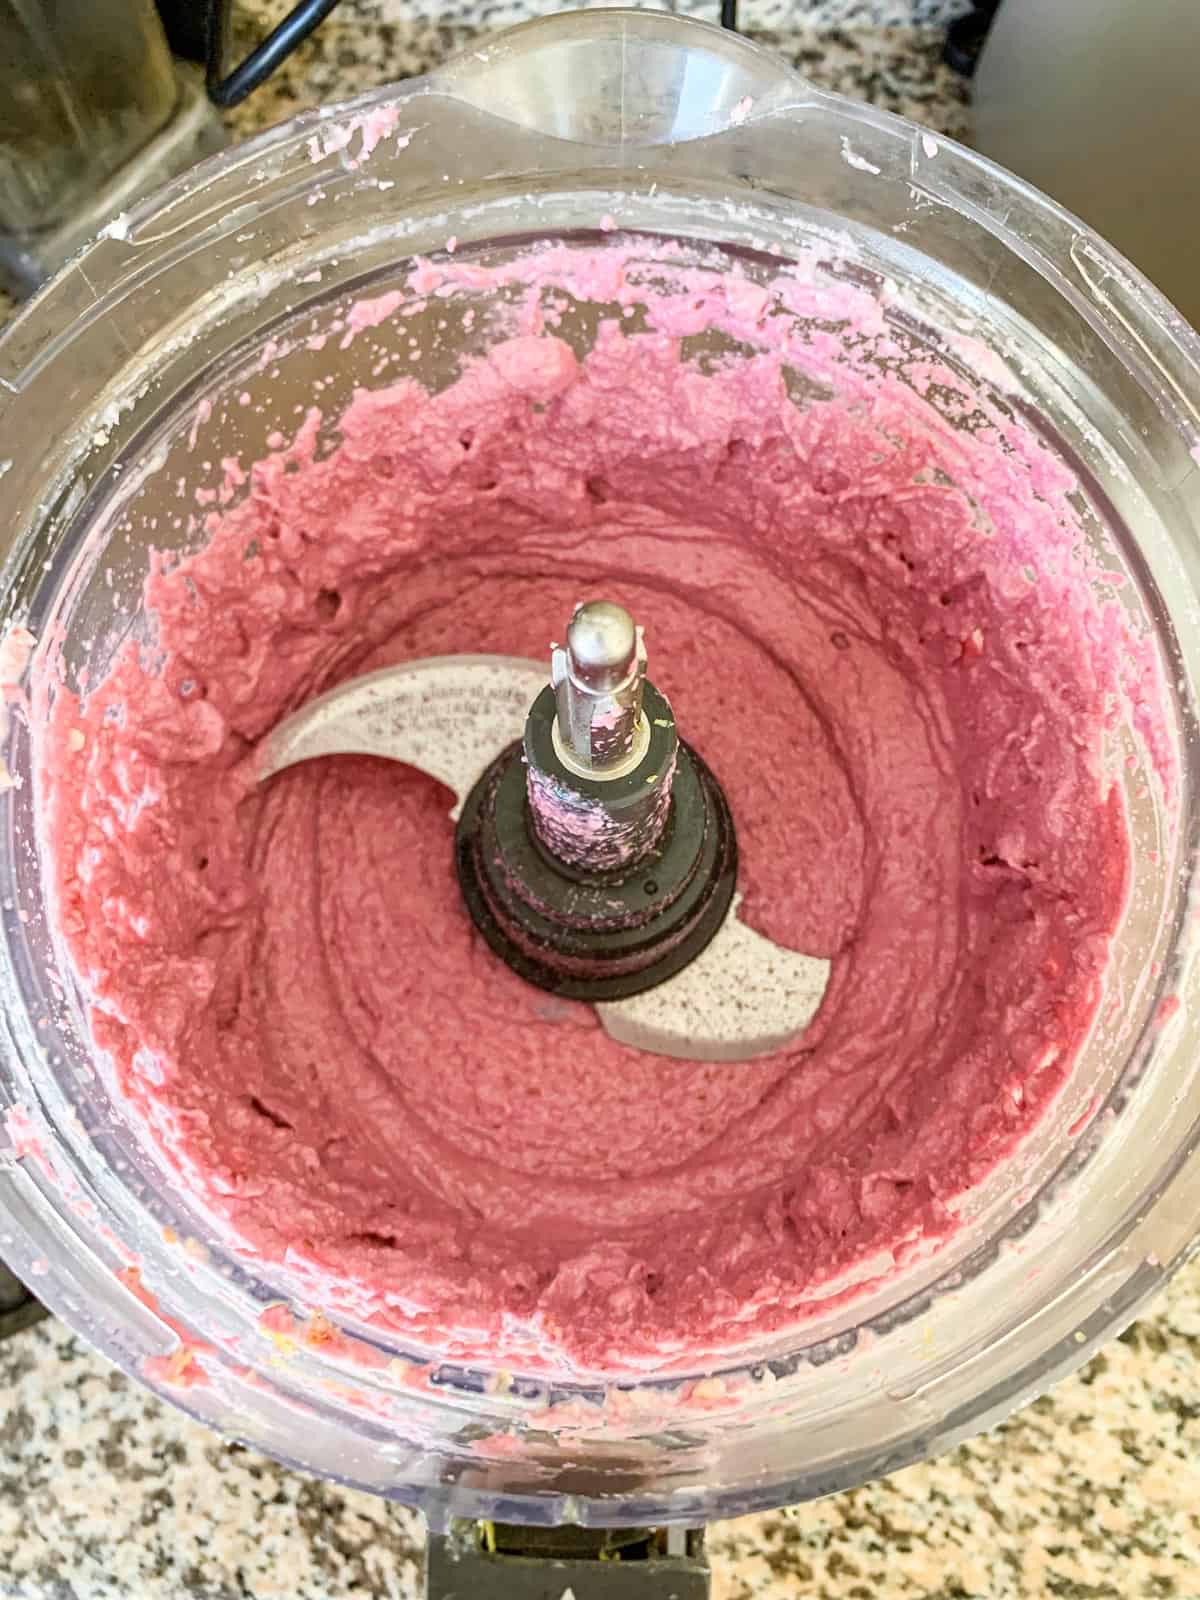 Creamy raspberry filling in a food processor.